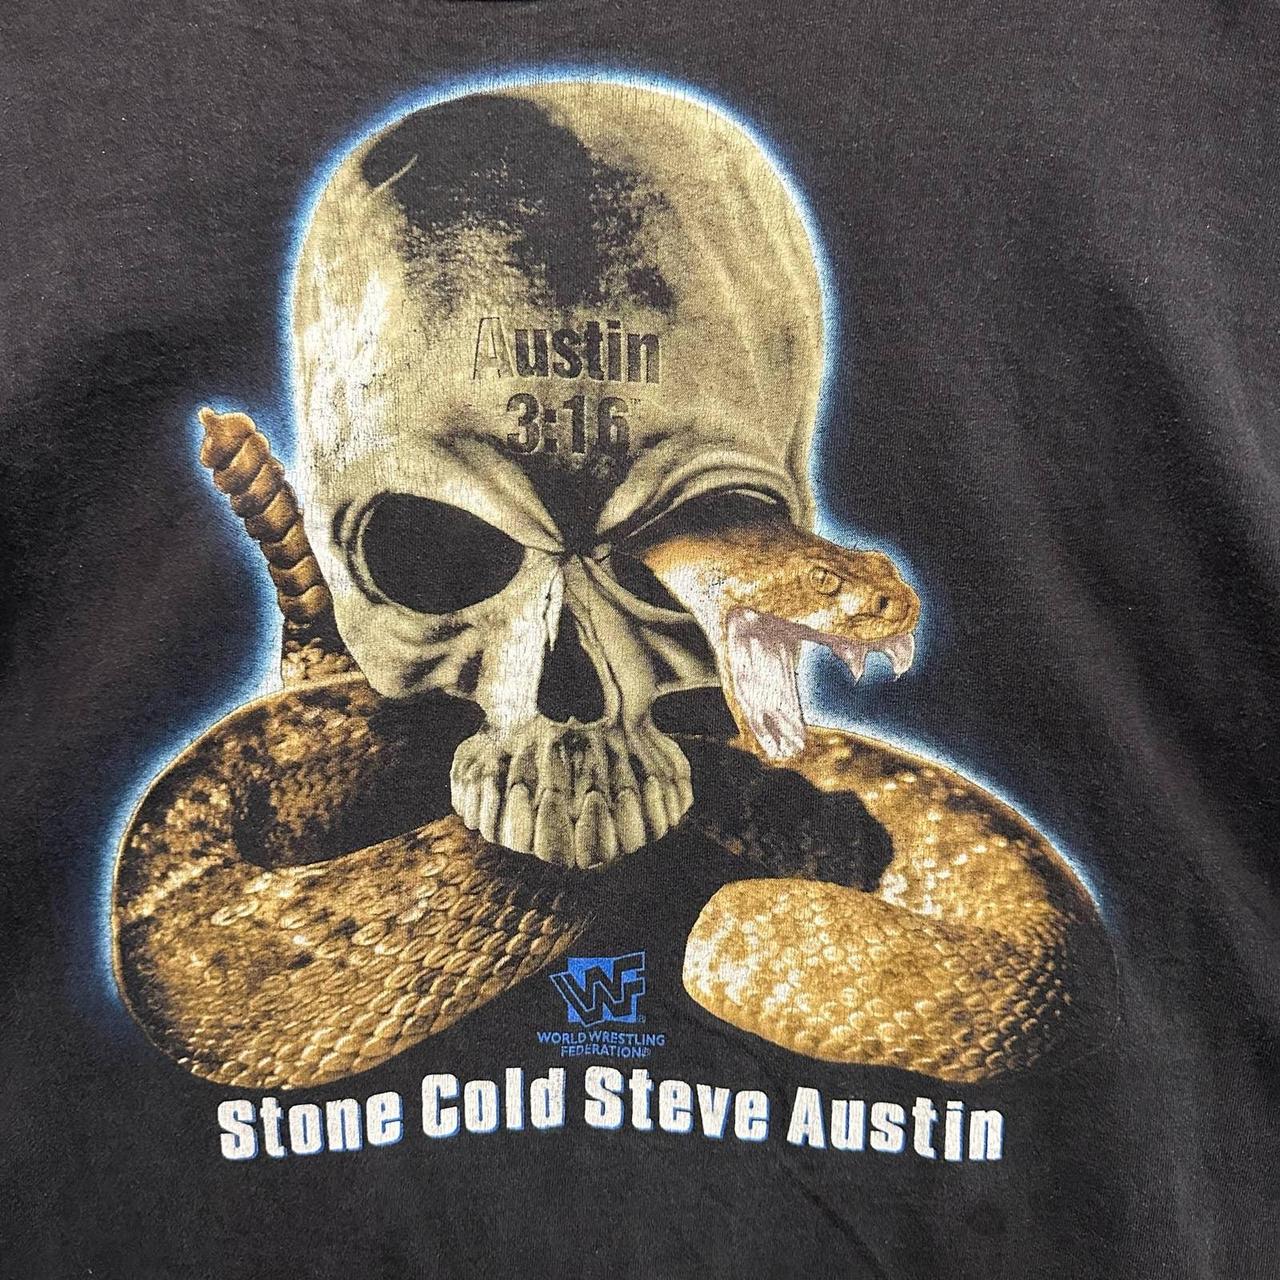 stone cold steve austin 3:16 logo